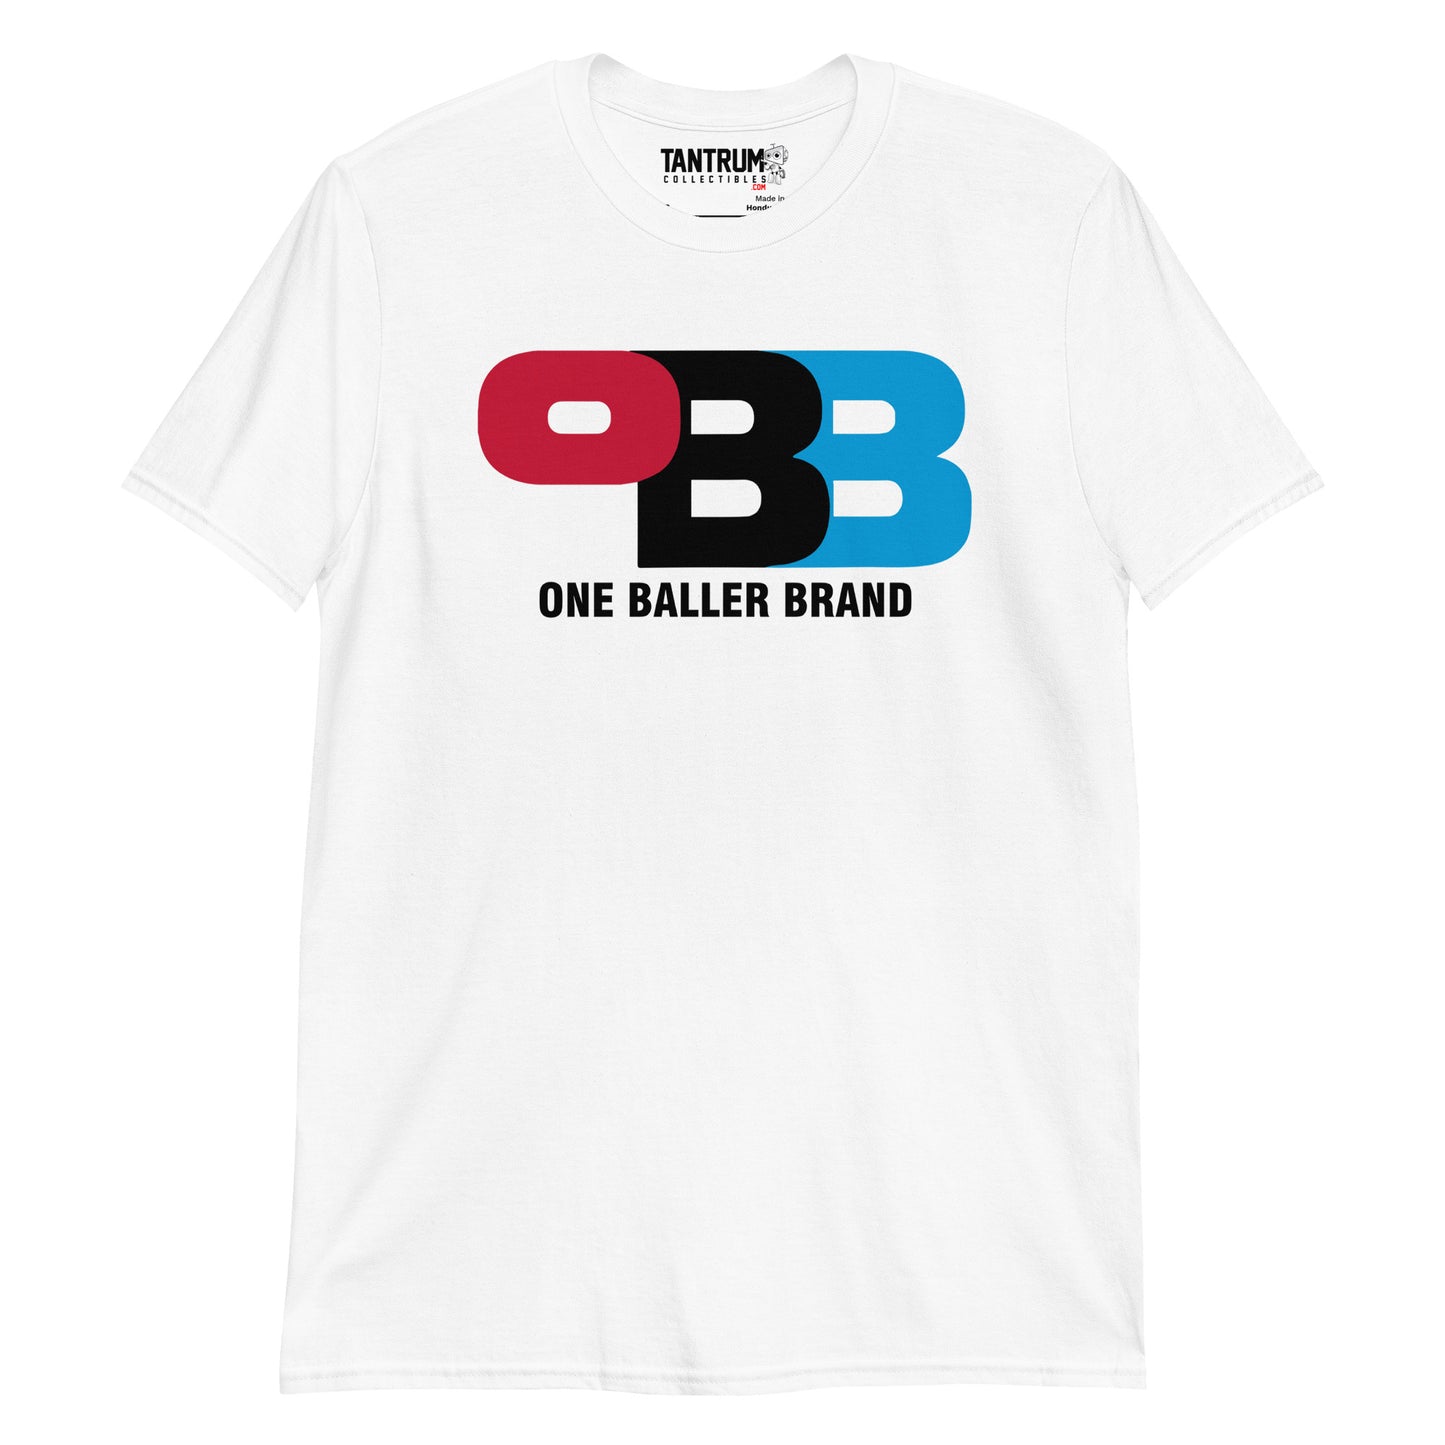 Keizaron - Short-Sleeve Unisex T-Shirt - OBB